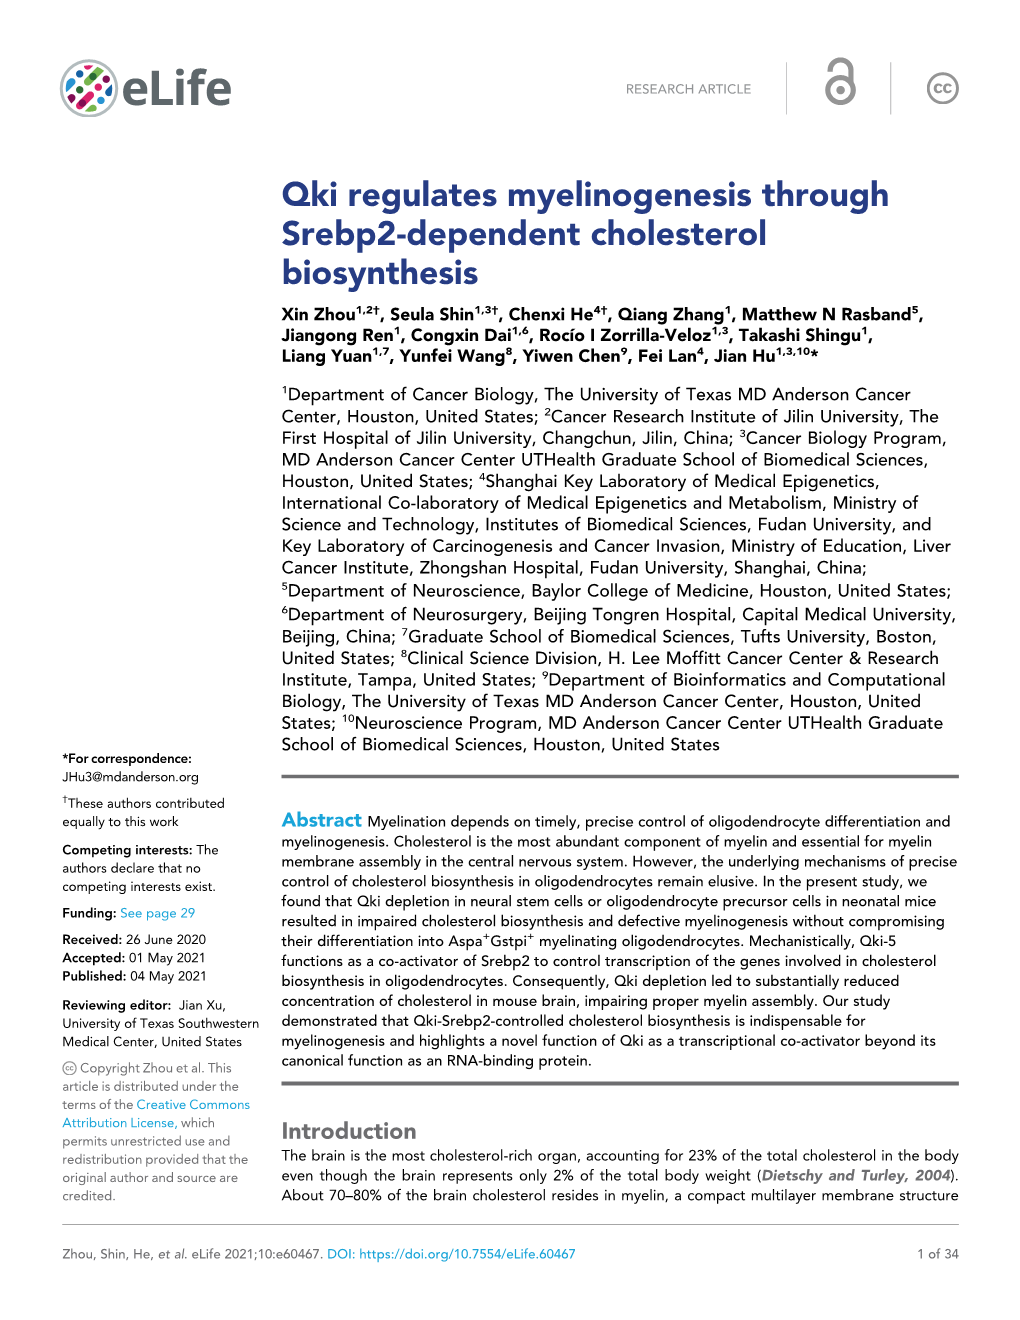 Qki Regulates Myelinogenesis Through Srebp2-Dependent Cholesterol